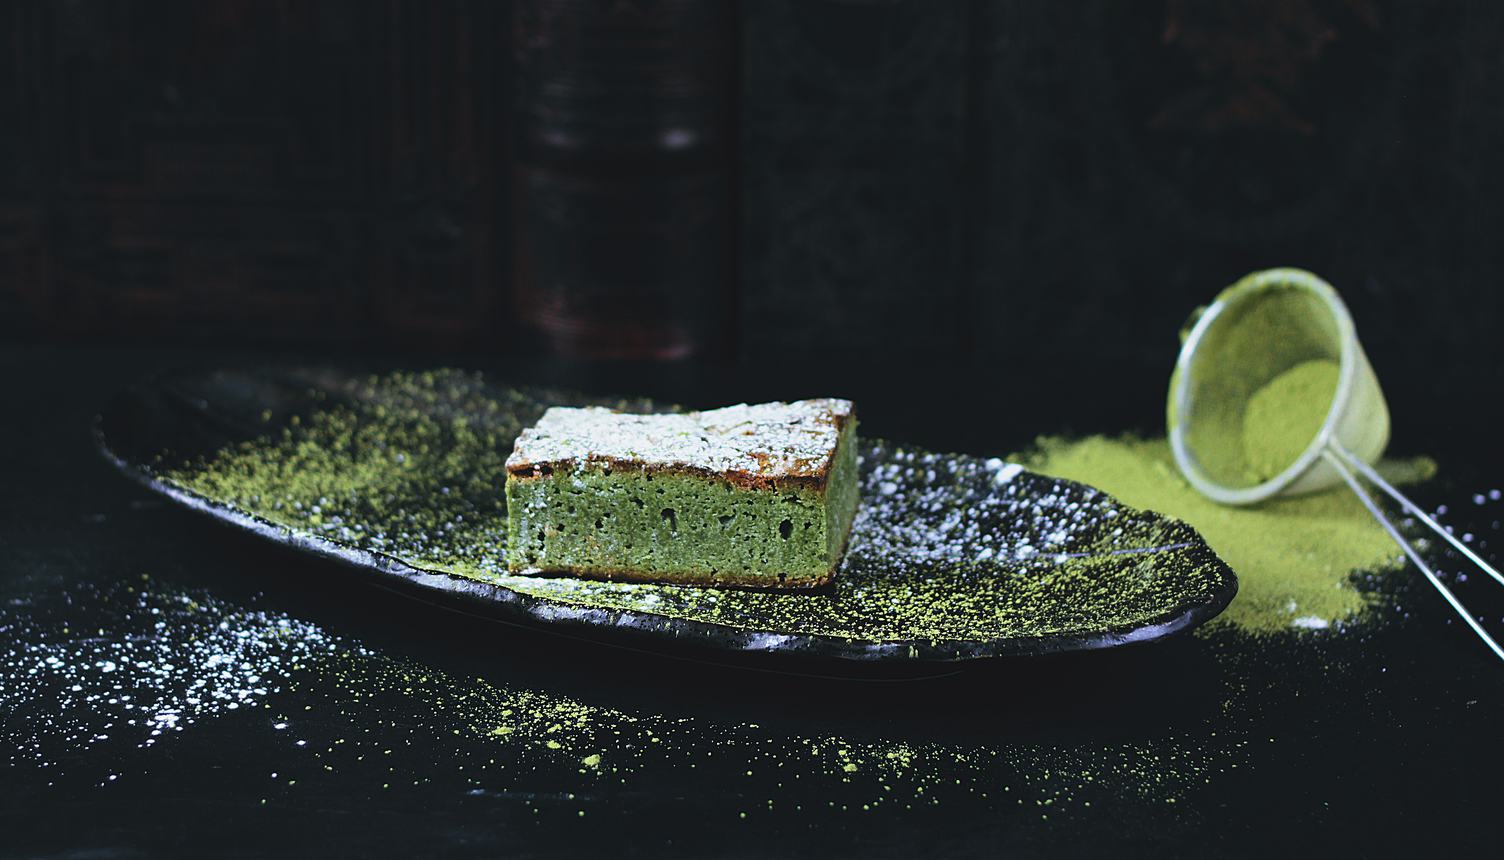 Japanese Matcha Green Tea Cheesecake on Black Plate, Healthy Dessert